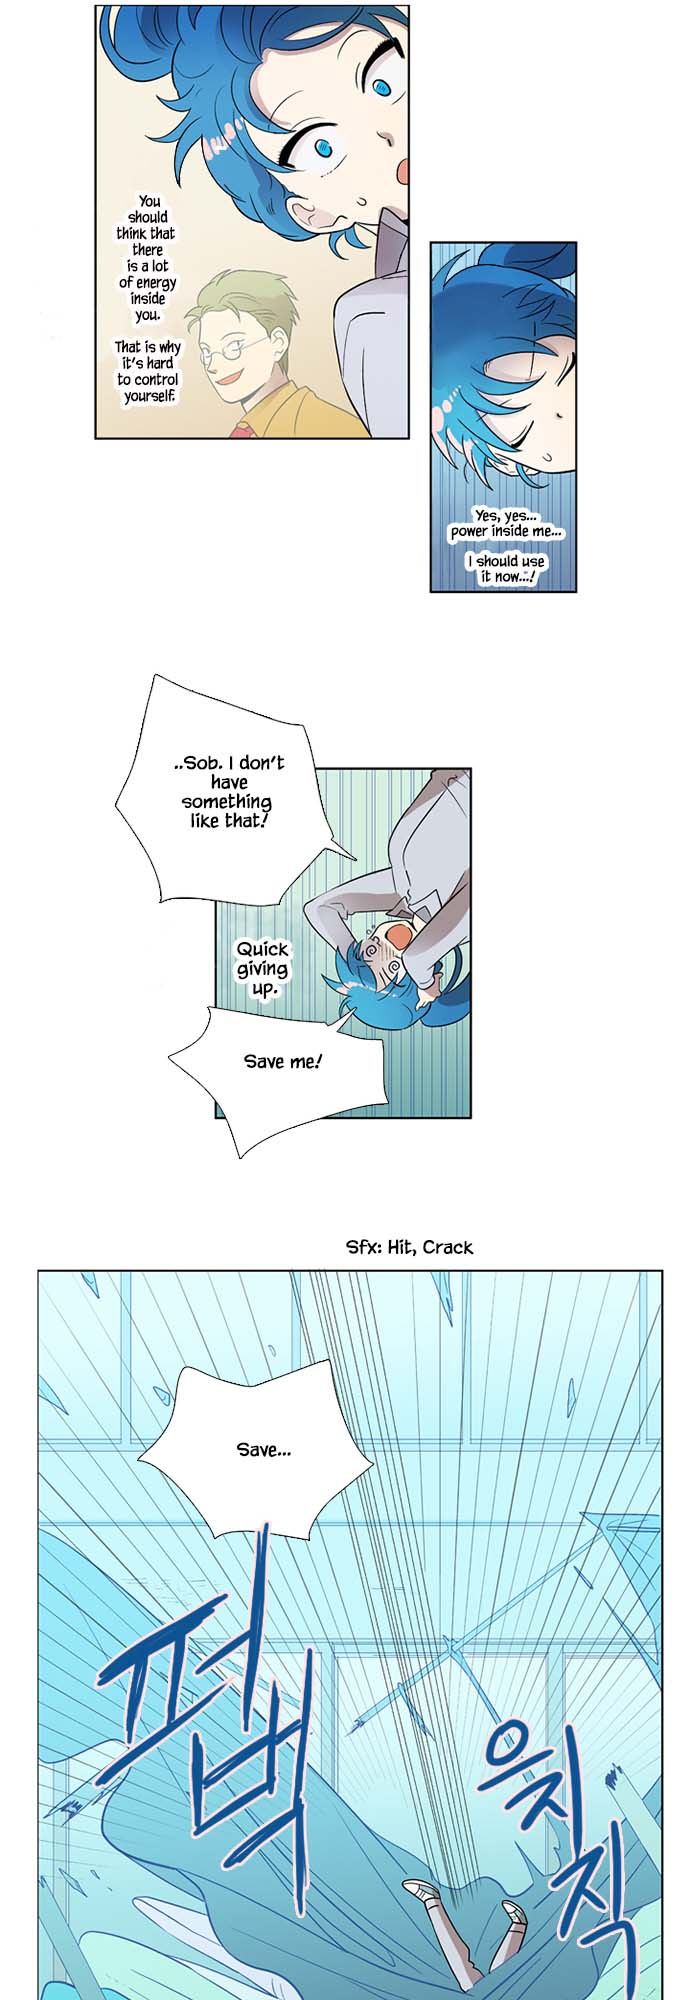 Anti-Gravity Girl - Page 2